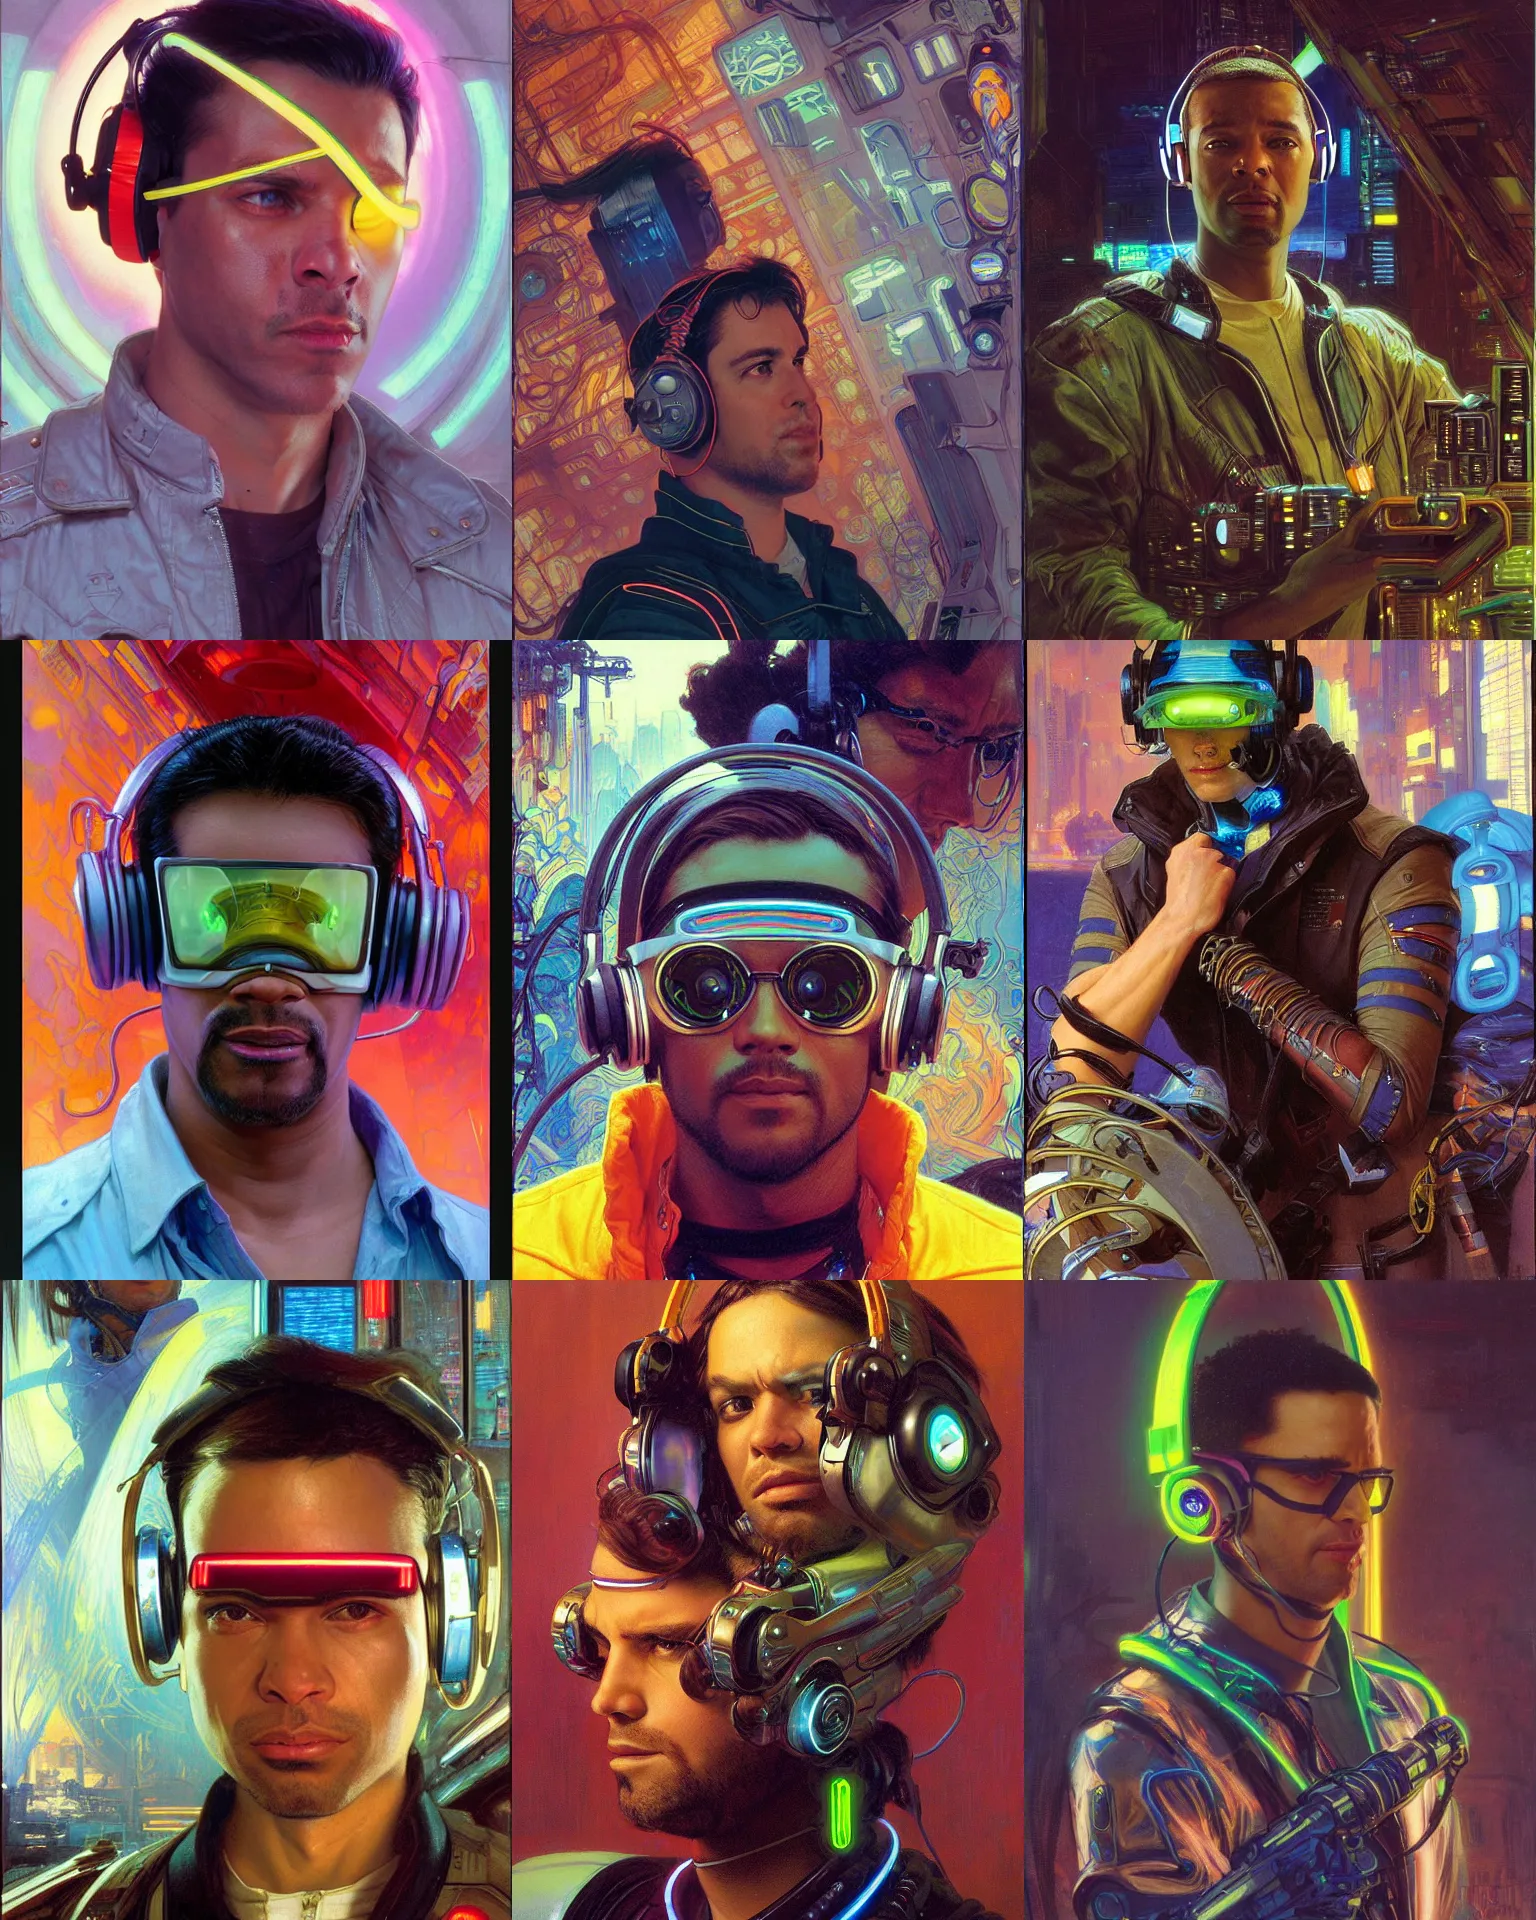 Prompt: digital neon cyberpunk male with geordi eye visor and headphones portrait painting by donato giancola, kilian eng, john berkey, j. c. leyendecker, alphonse mucha